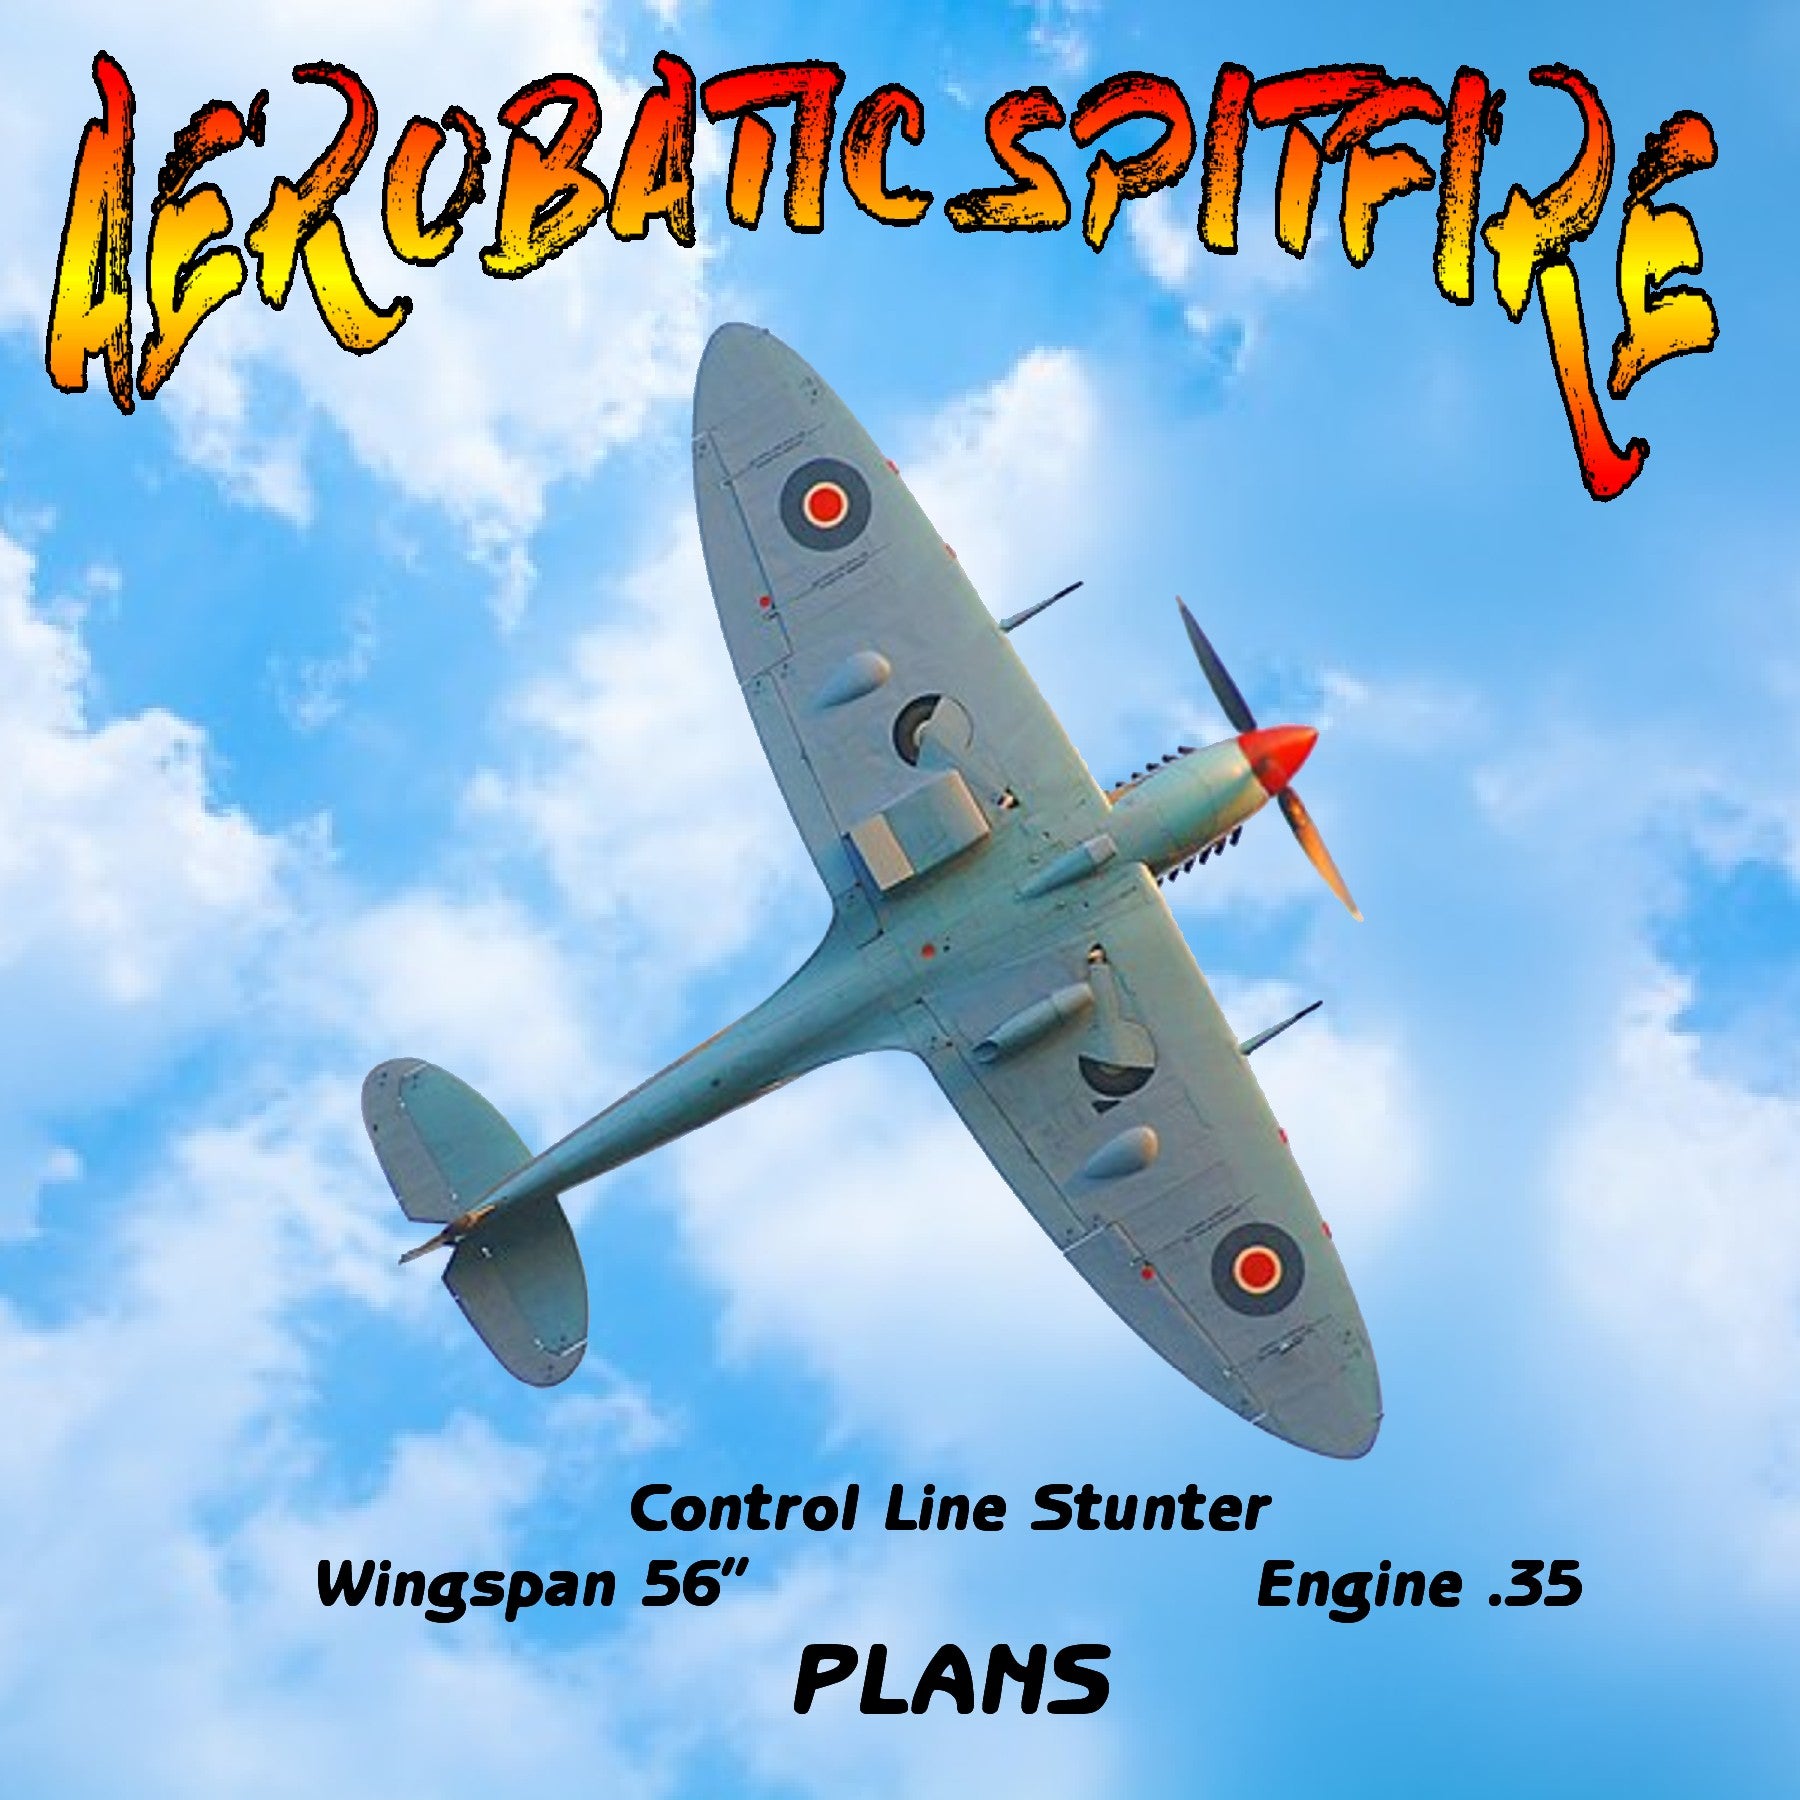 full size printed plan aerobatic spitfire control line stunt  wingspan 56"  engine .35